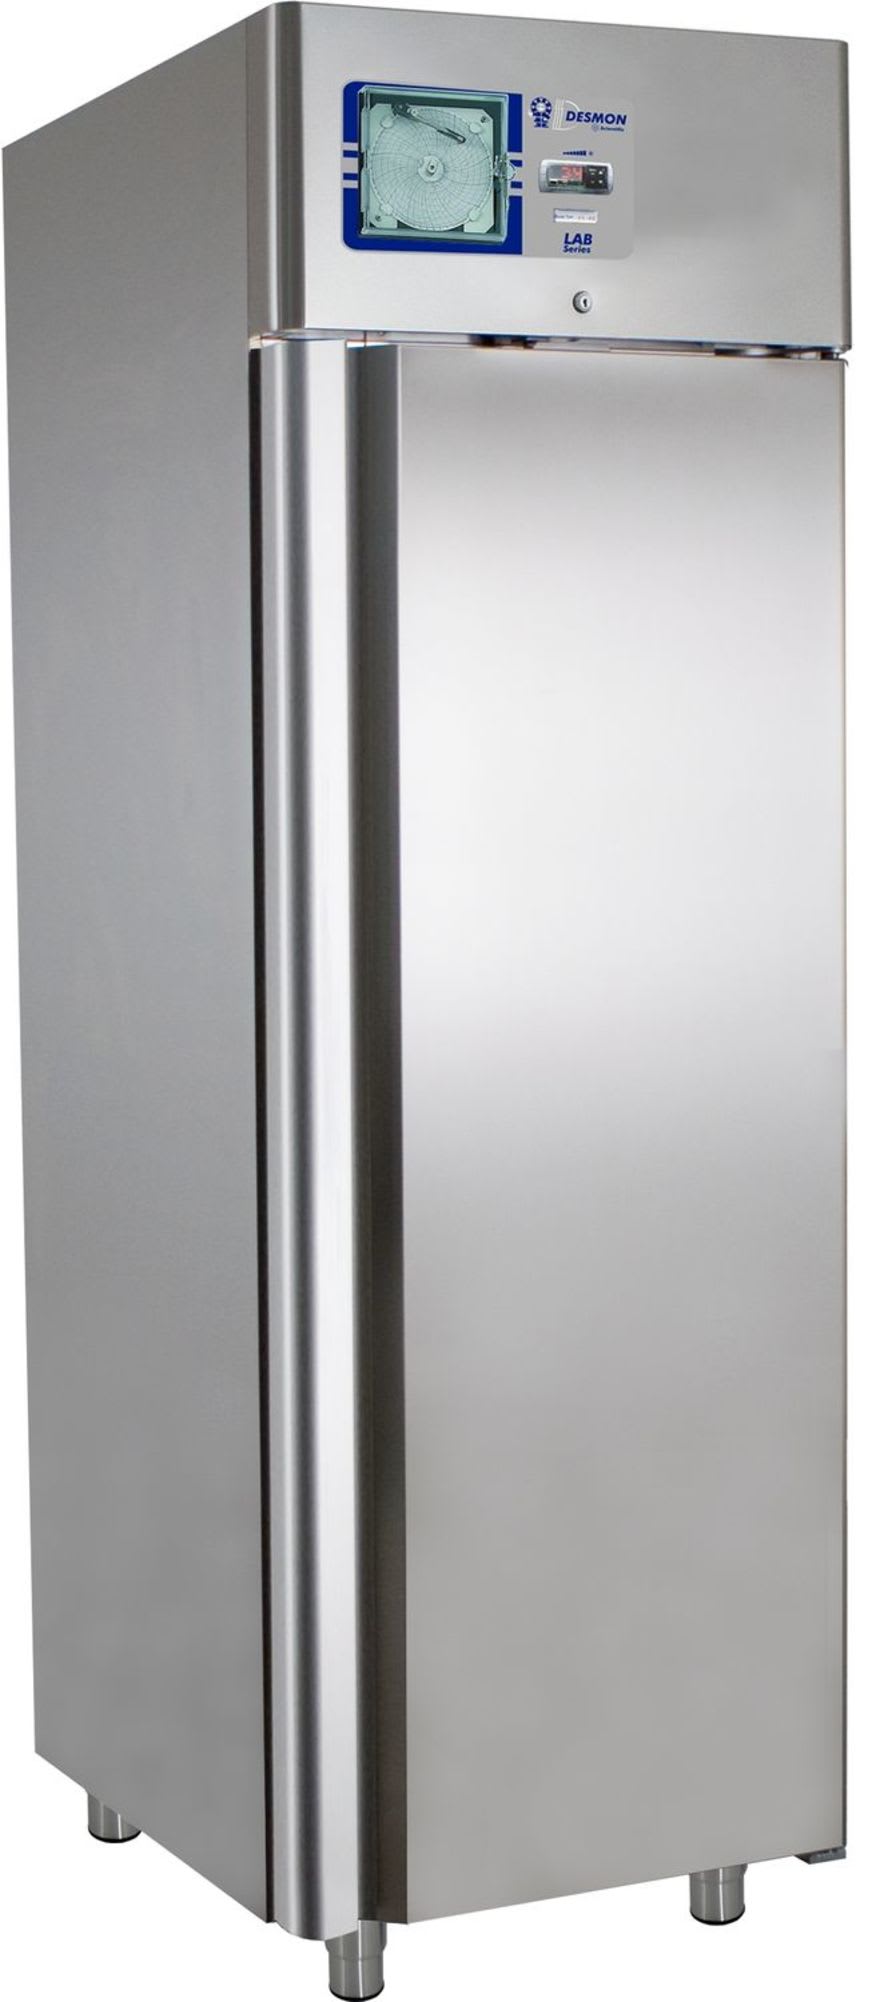 Prepper Tools: Refrigerator and Freezer Temperature Alarms 